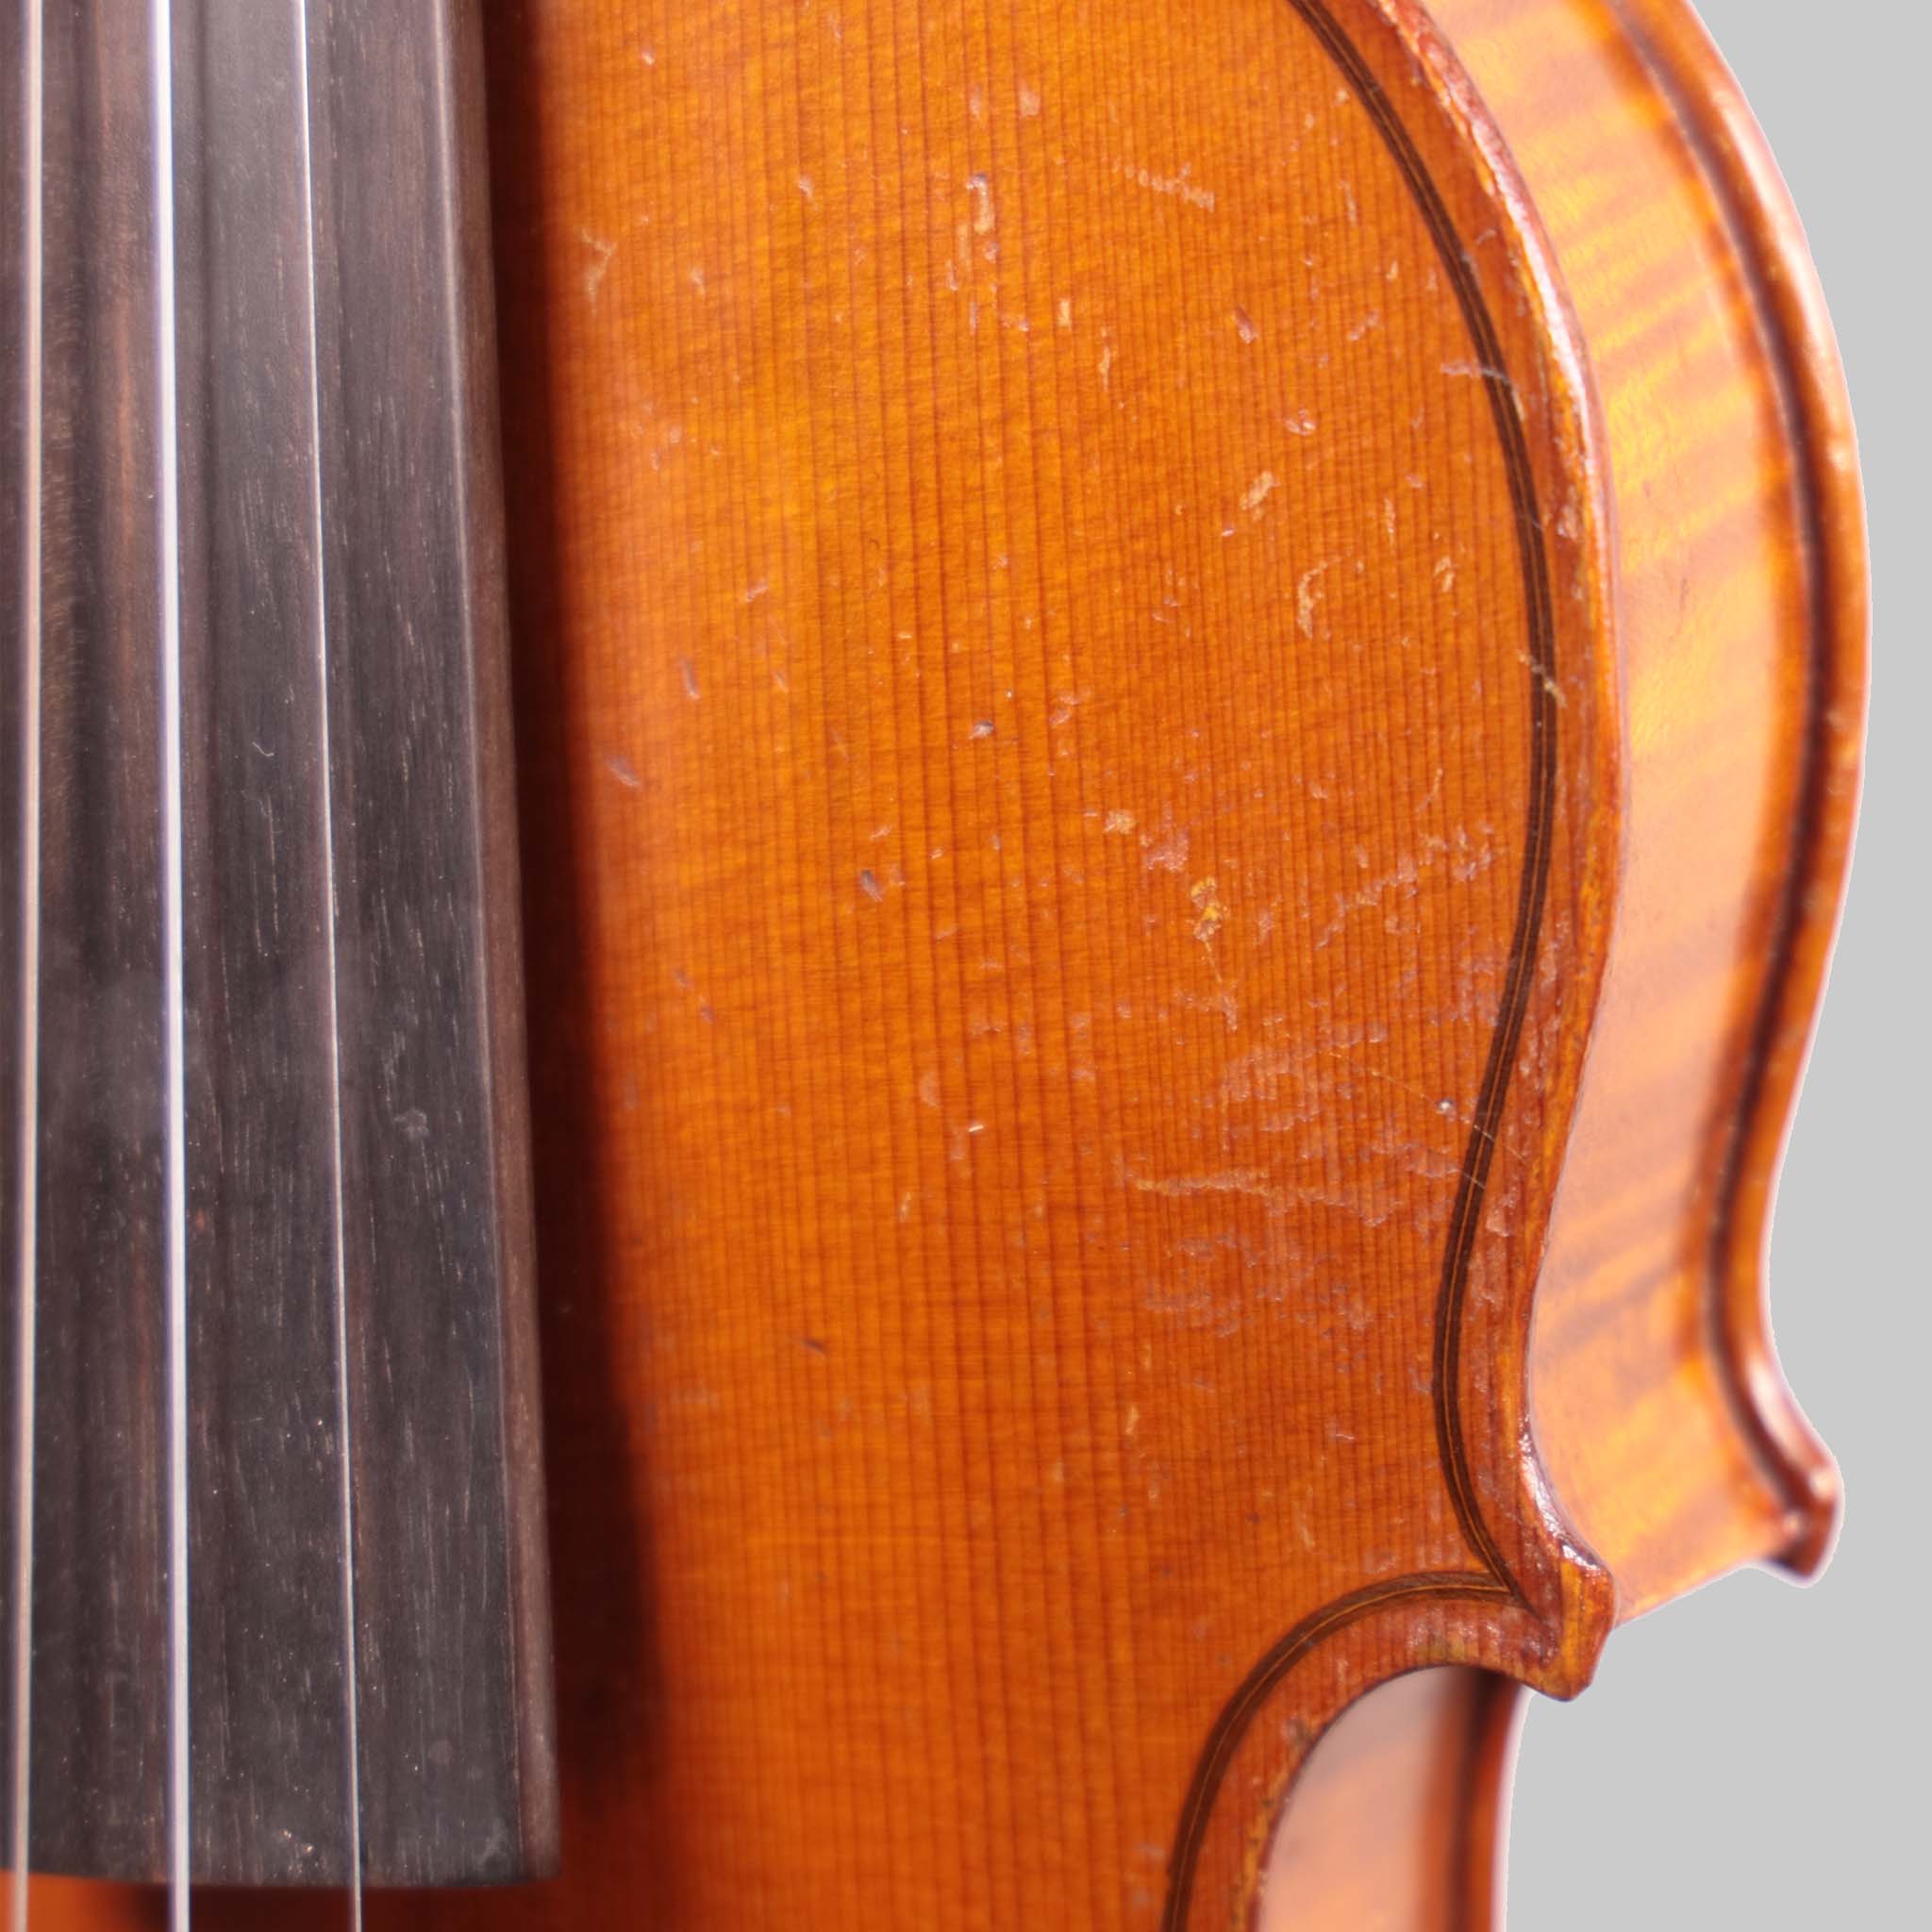 Eduard Reichart, Dresden Germany 1910 Violin (FS284)